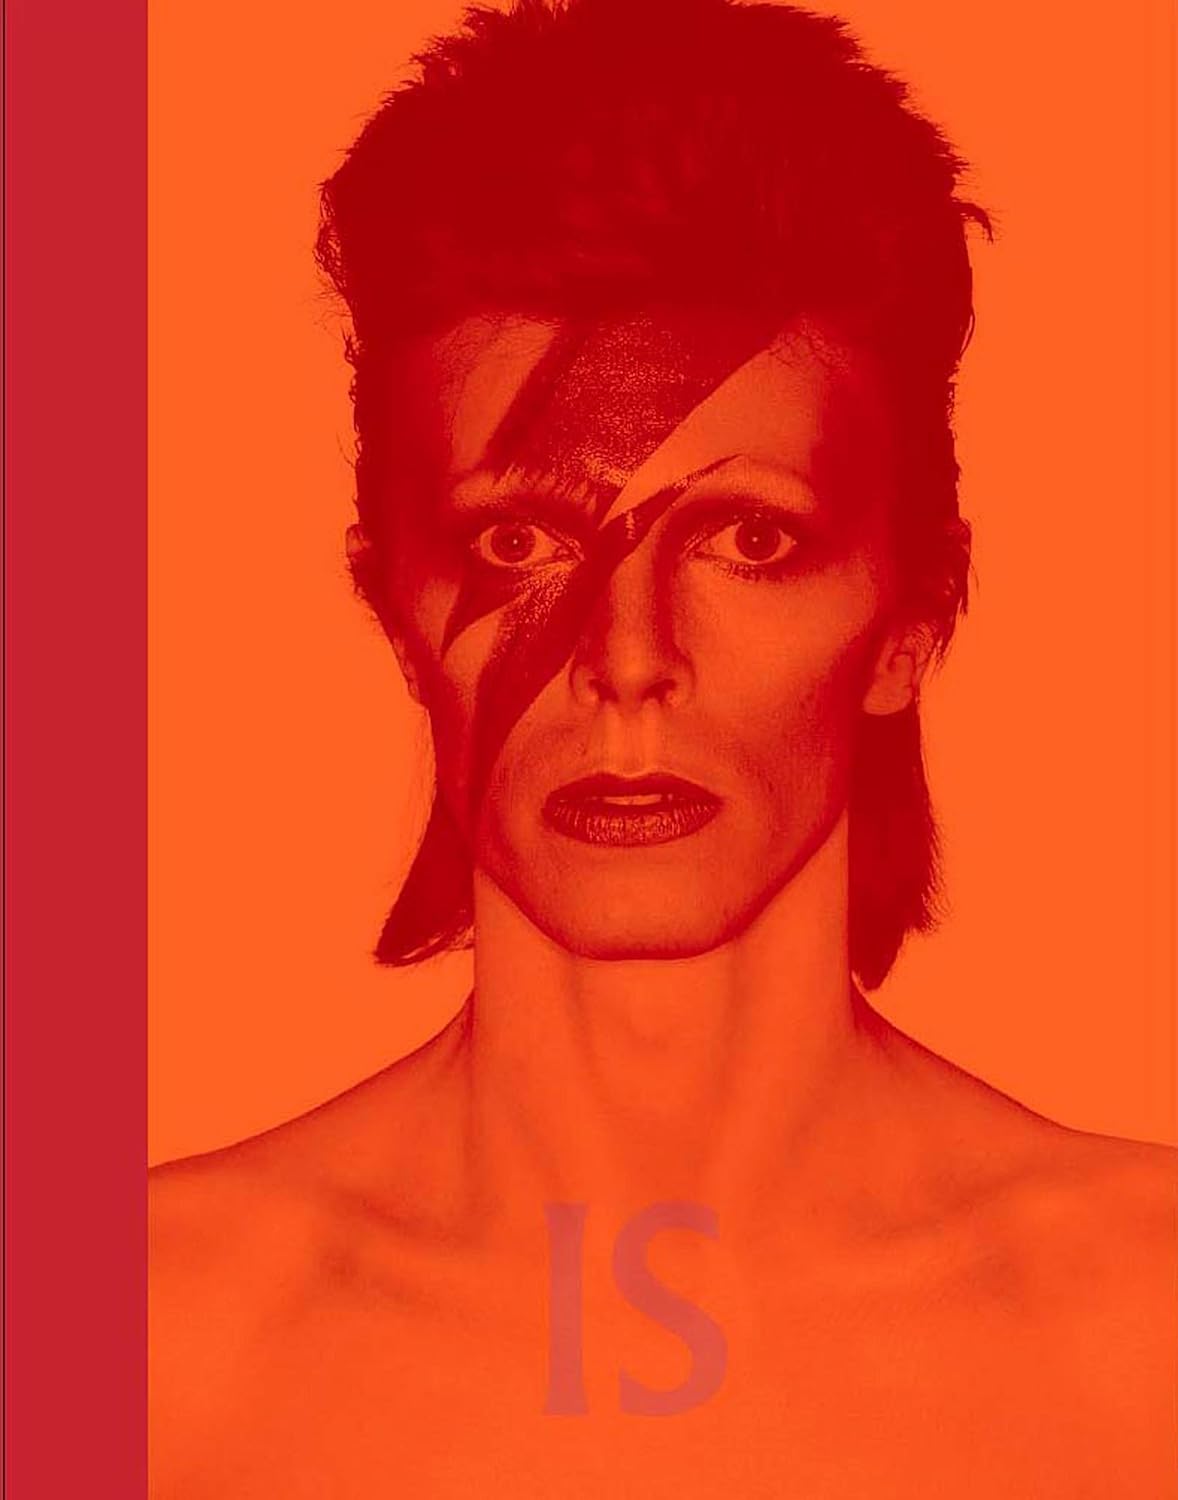 David Bowie is….